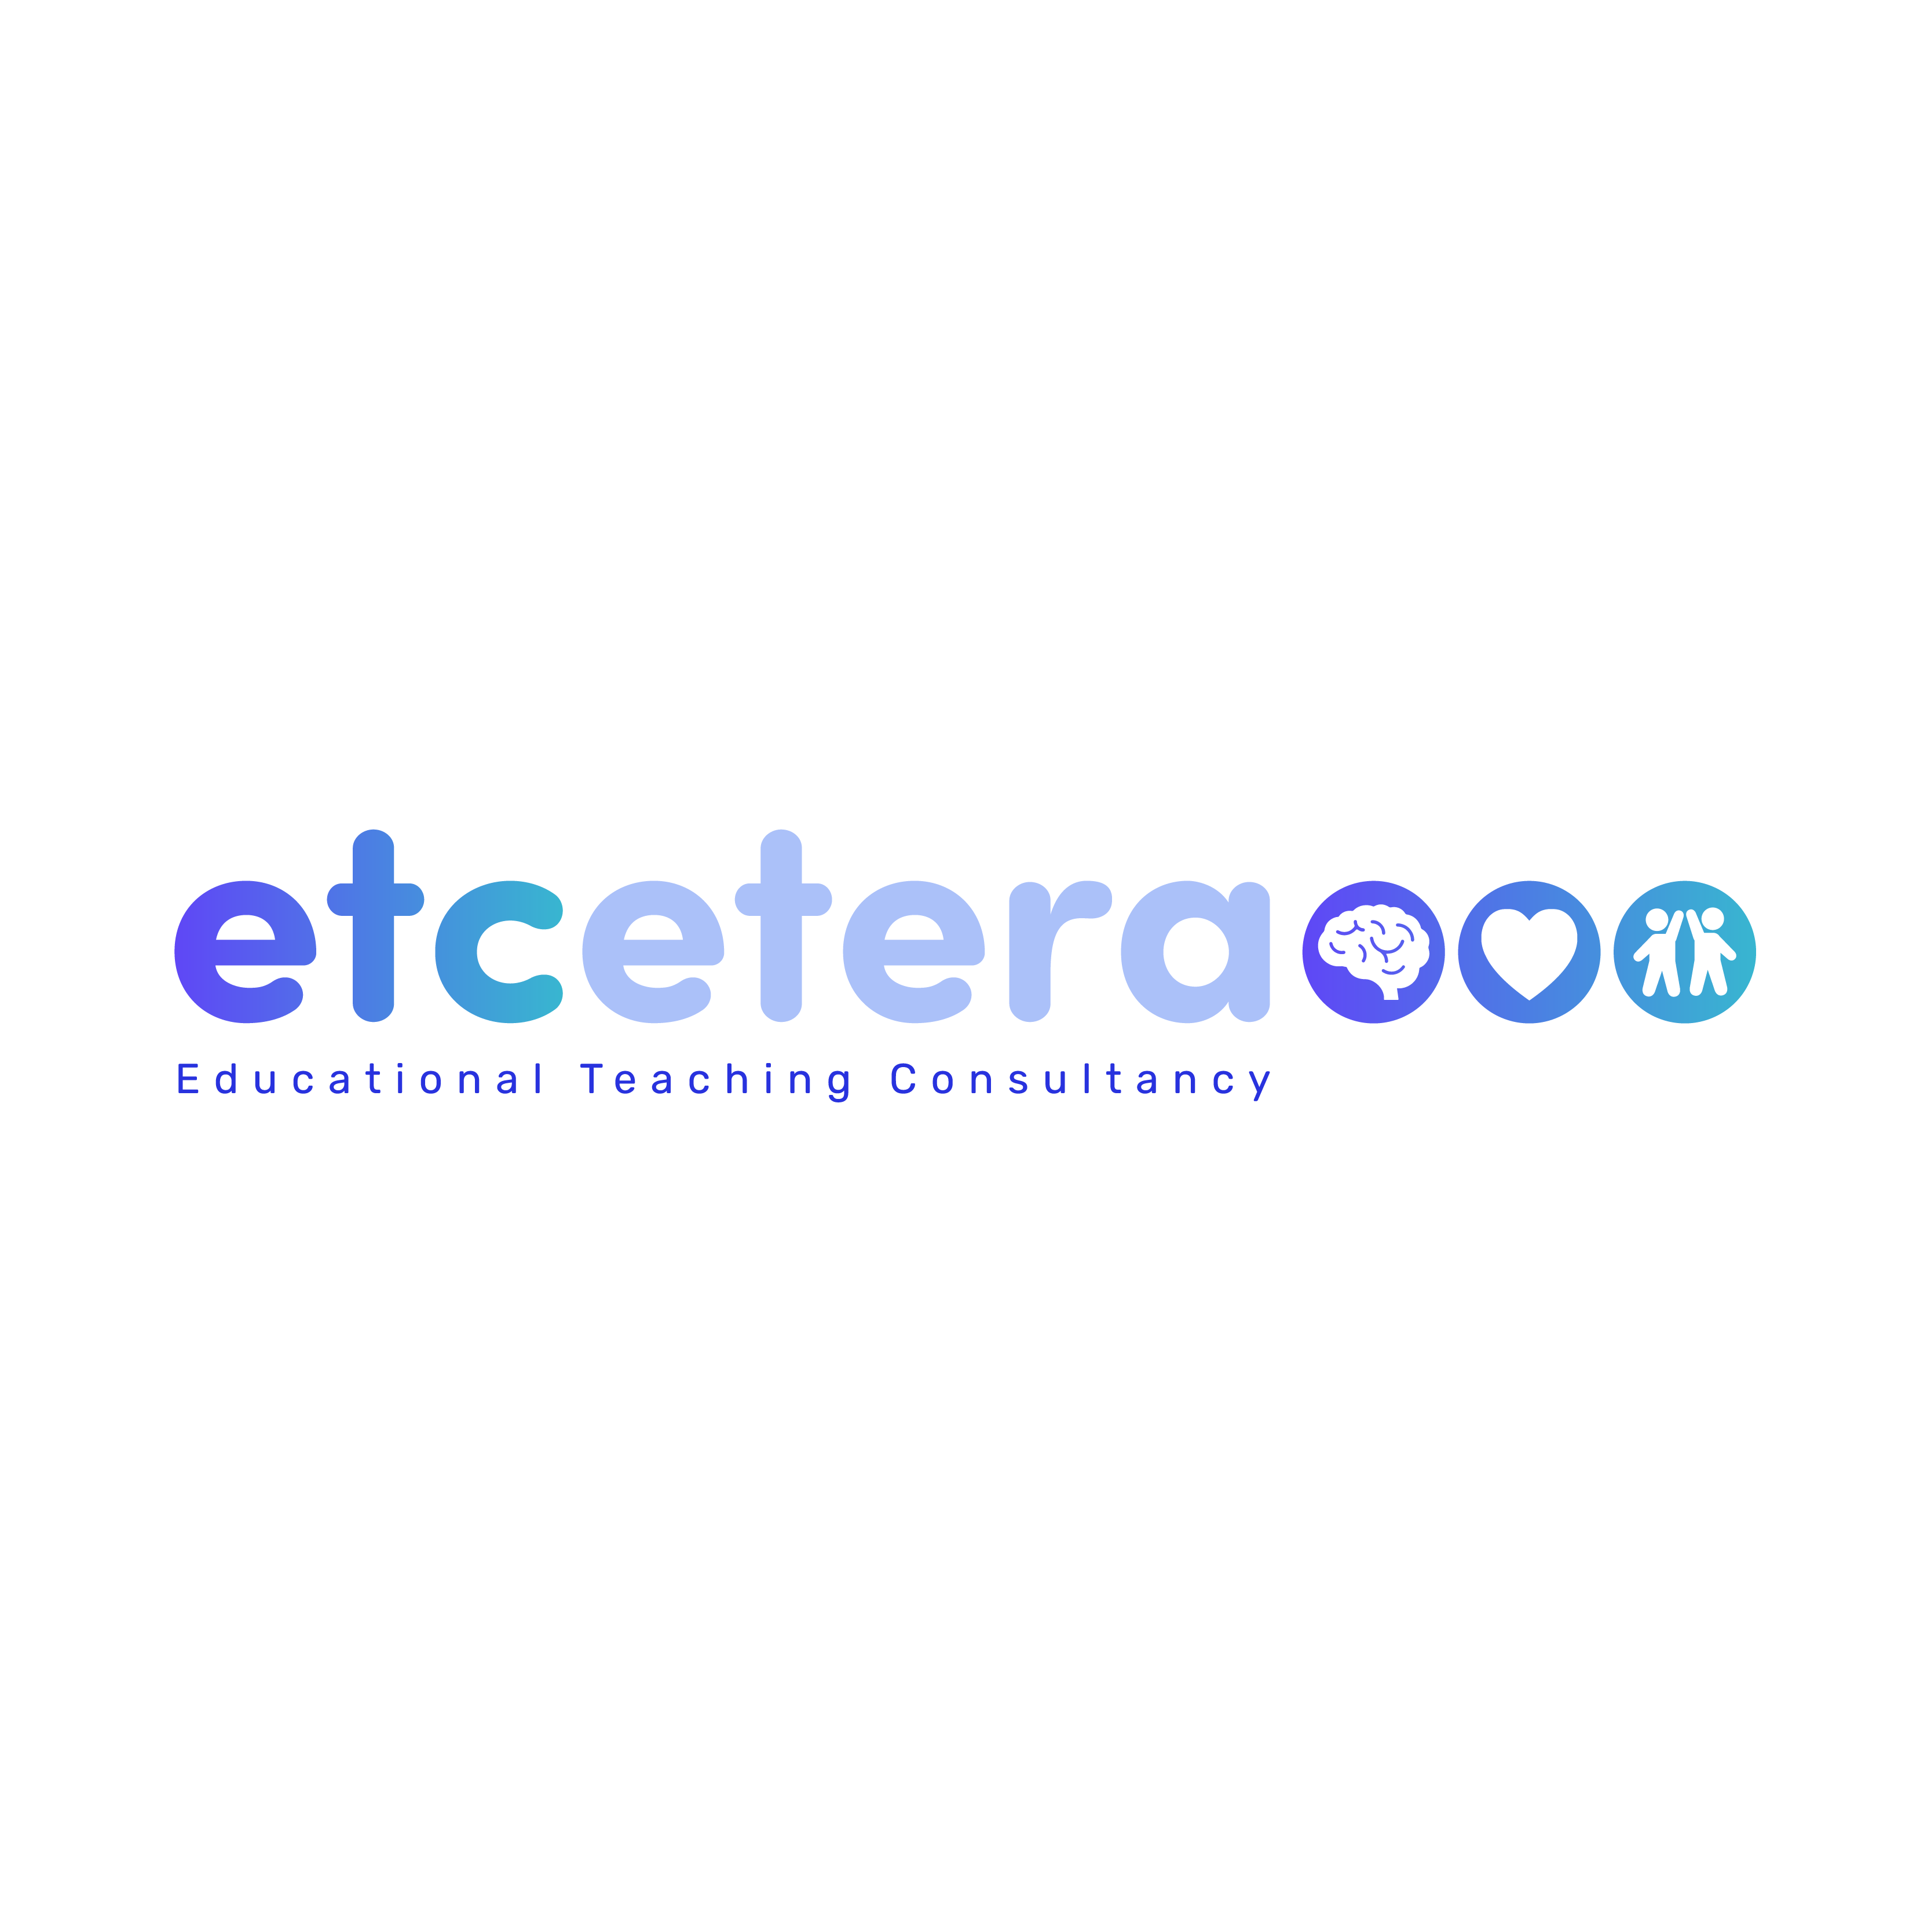 Etcetera - Educational Teaching Consultancy